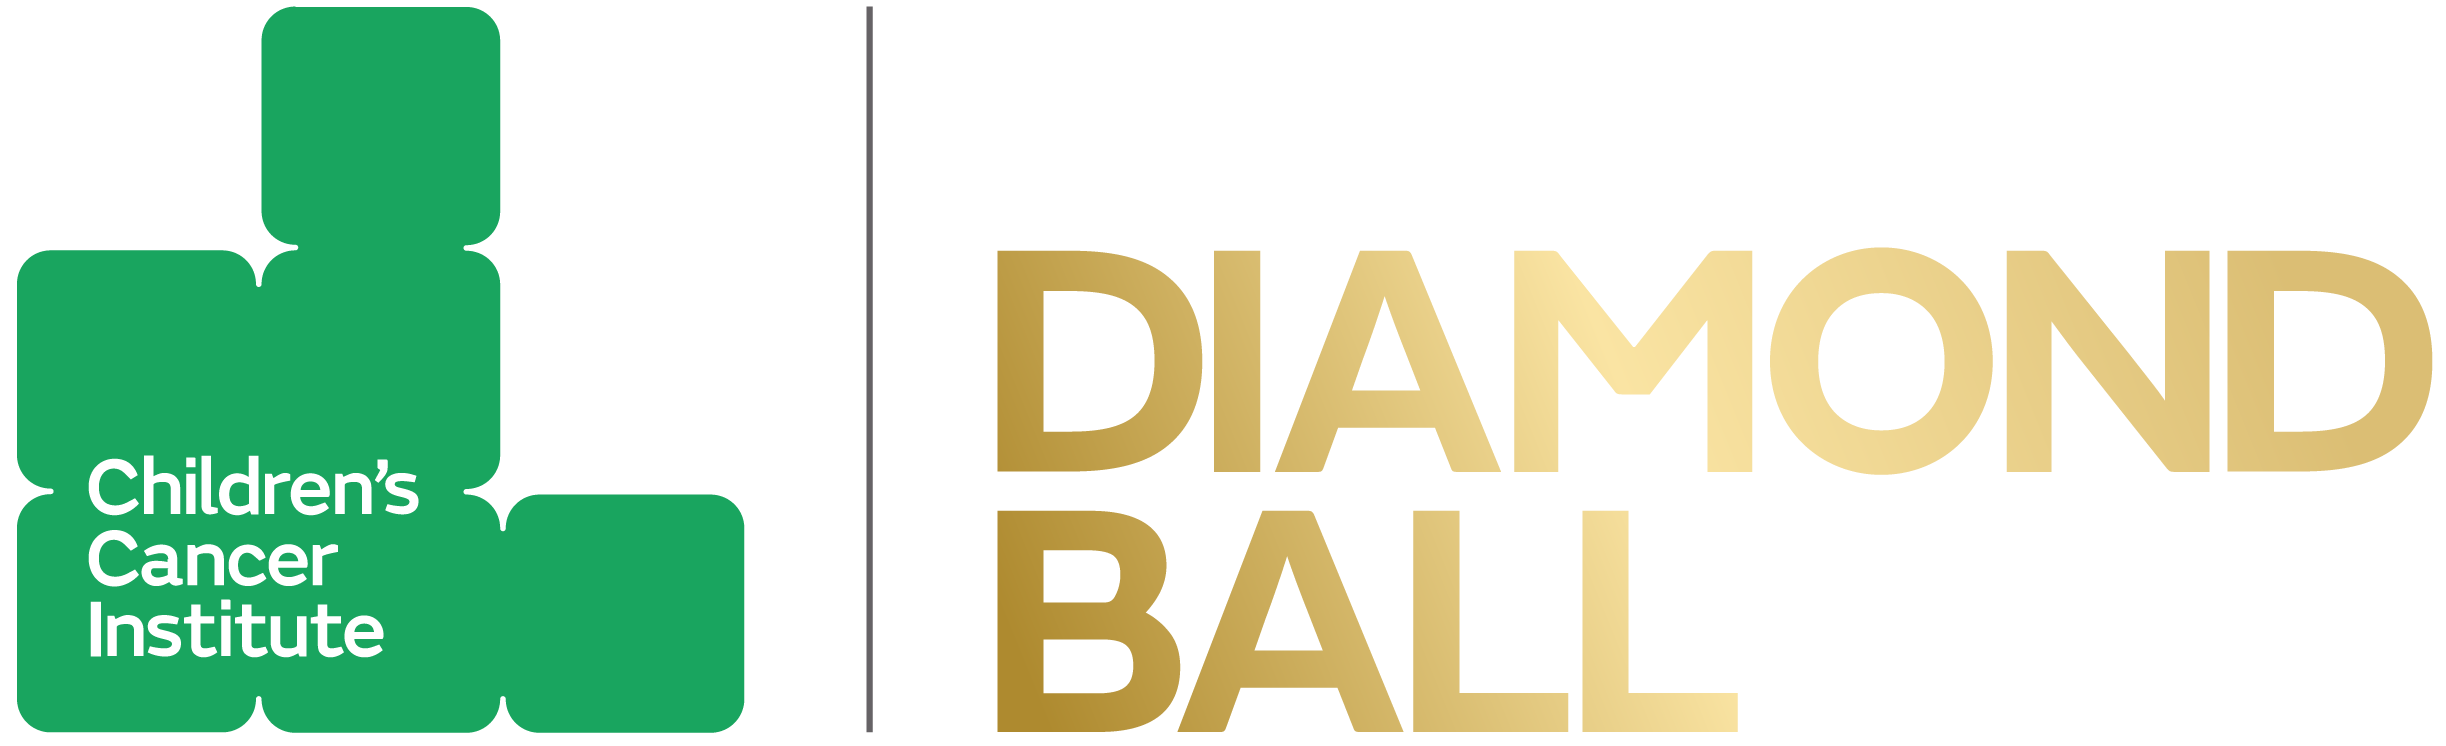 Children's Cancer Institute Diamond Ball Logos